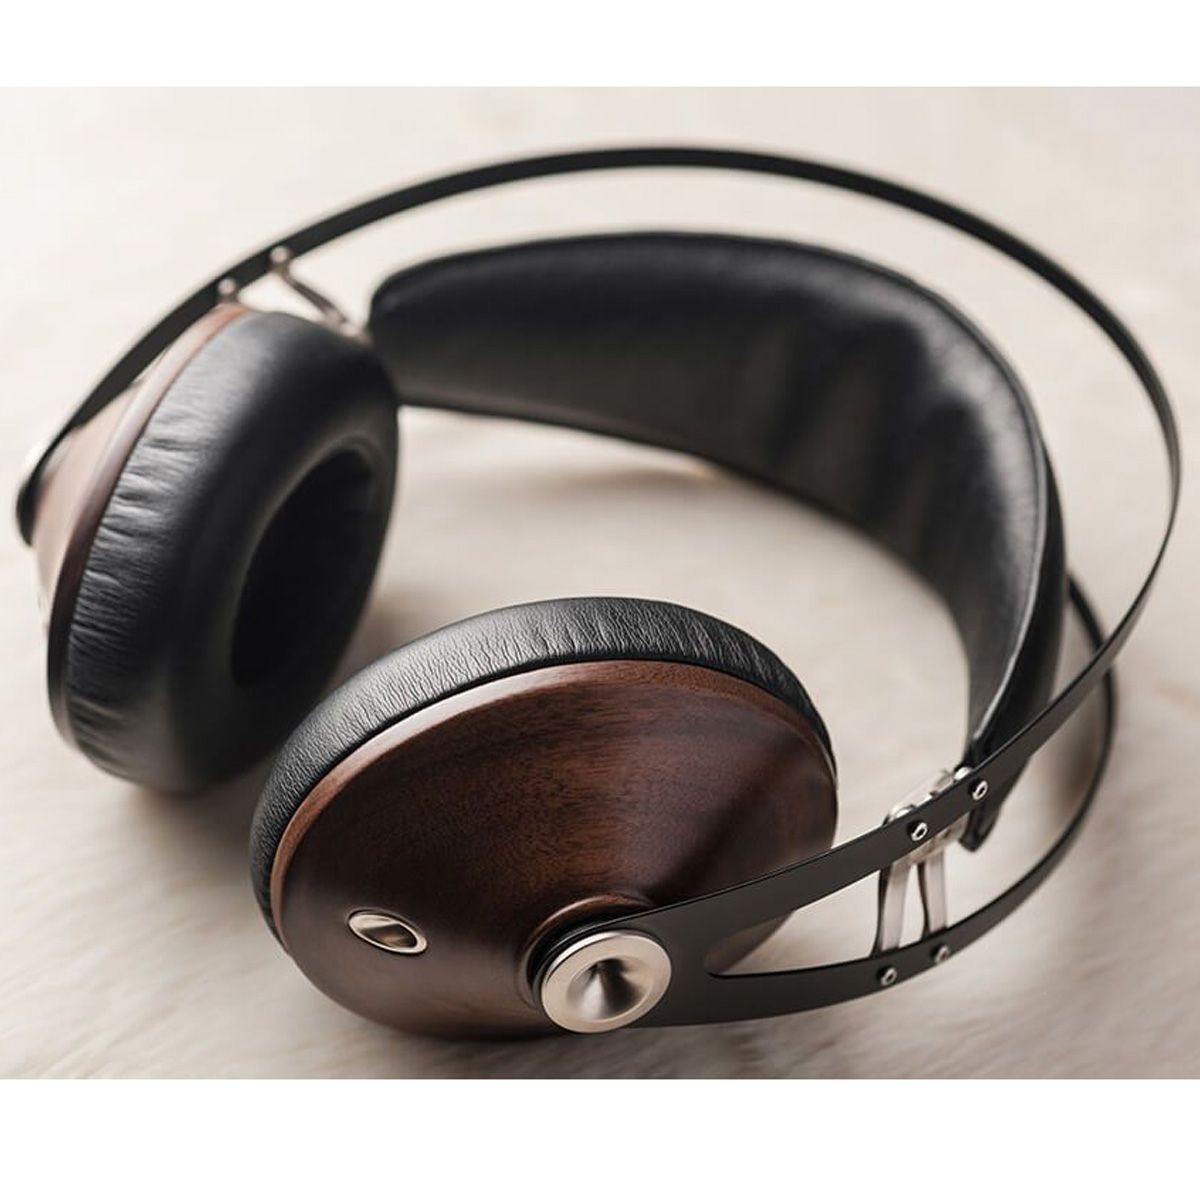 Meze Audio 99 Classics Over-Ear Headphones